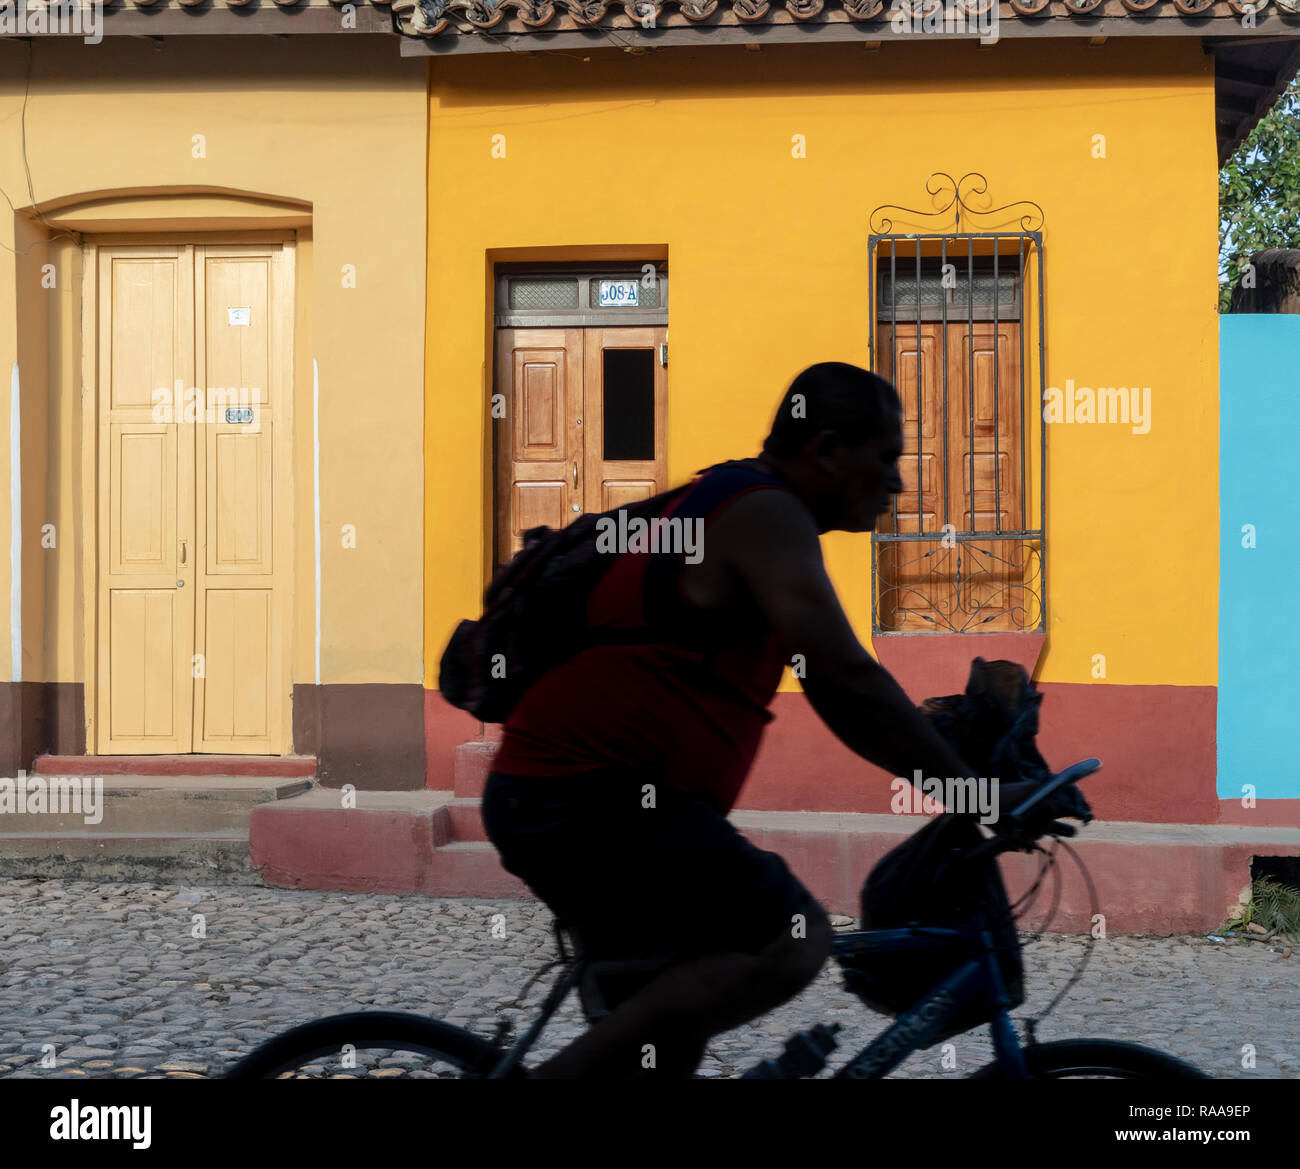 La silhouette du cycliste, Calle Santa Ana, Trinidad, Cuba Banque D'Images